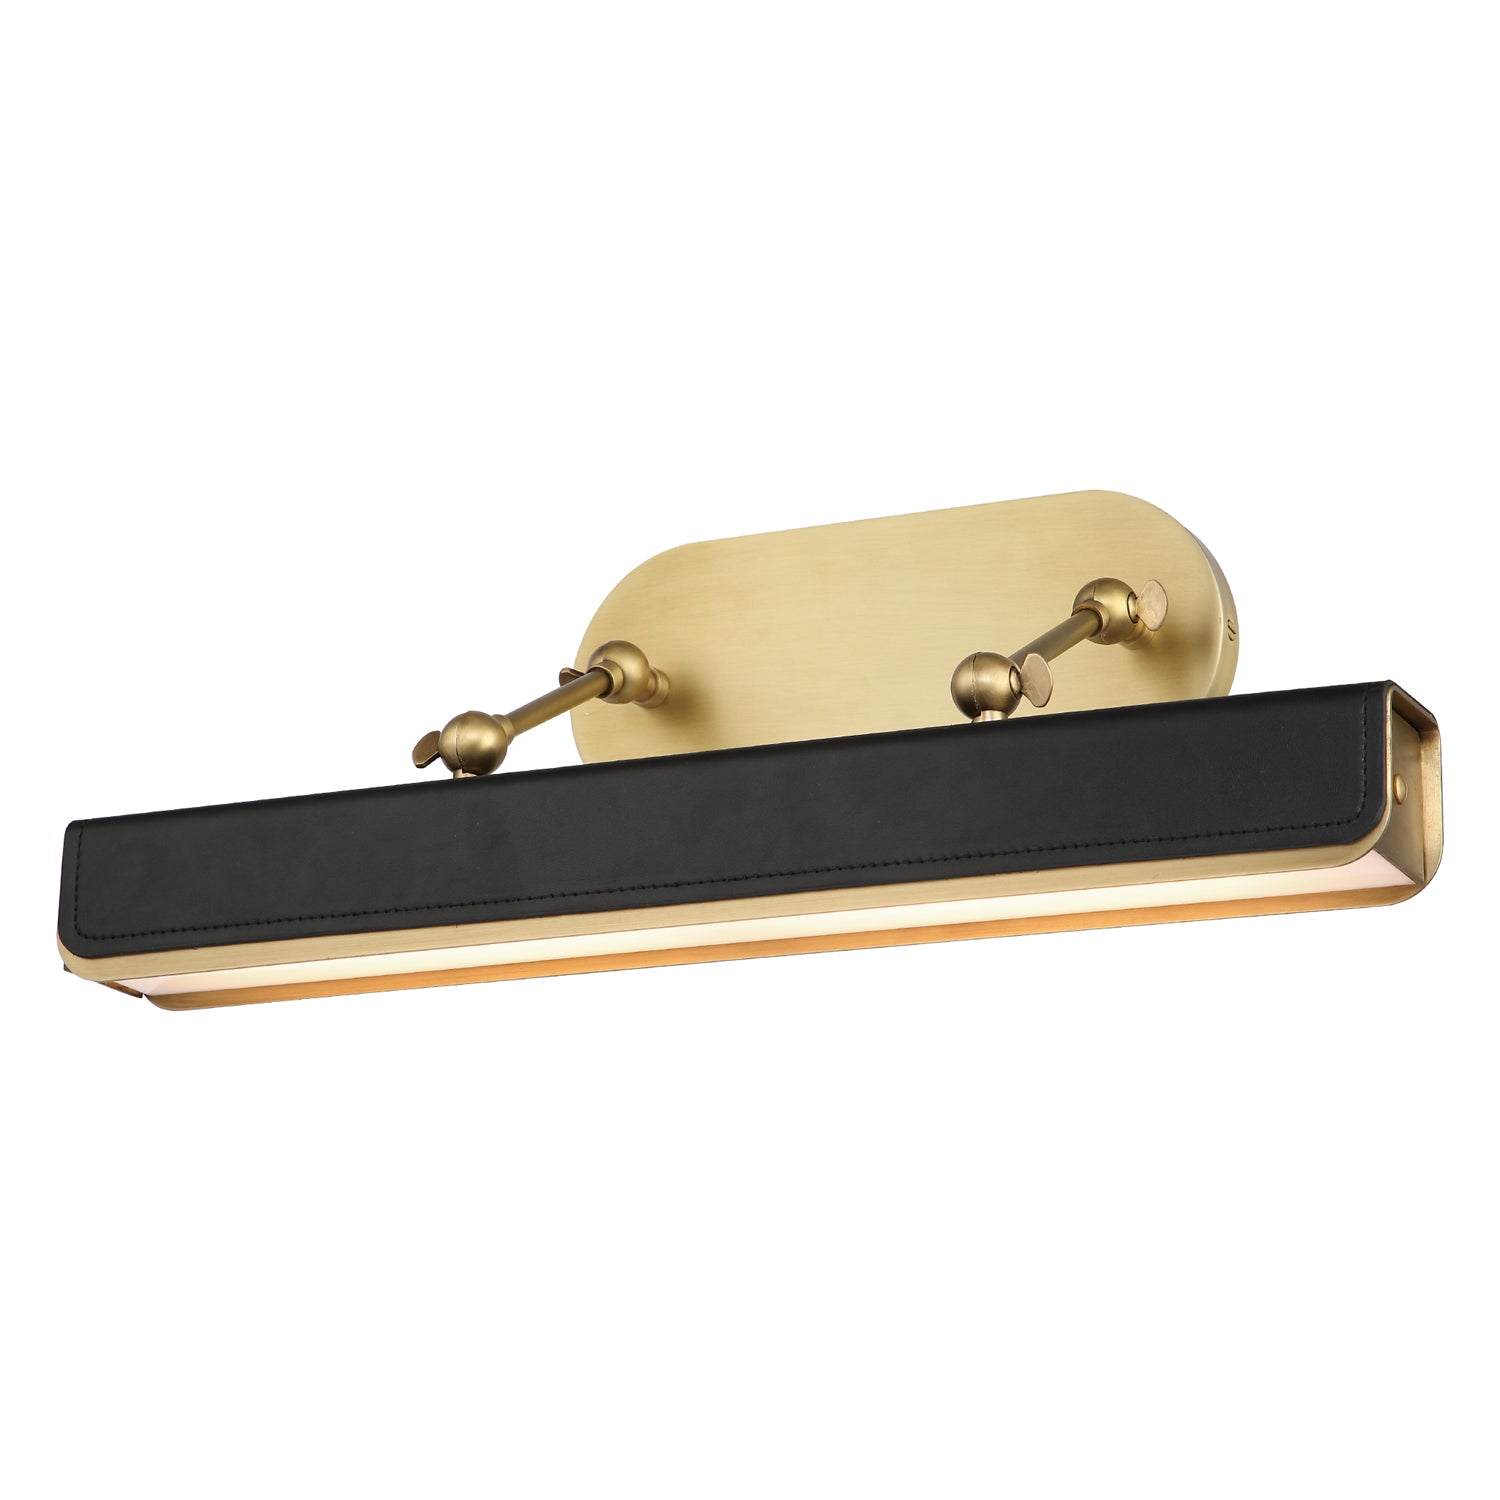 Alora Canada - LED Wall Sconce - Valise Picture - Vintage Brass/Tuxedo Leather- Union Lighting Luminaires Decor